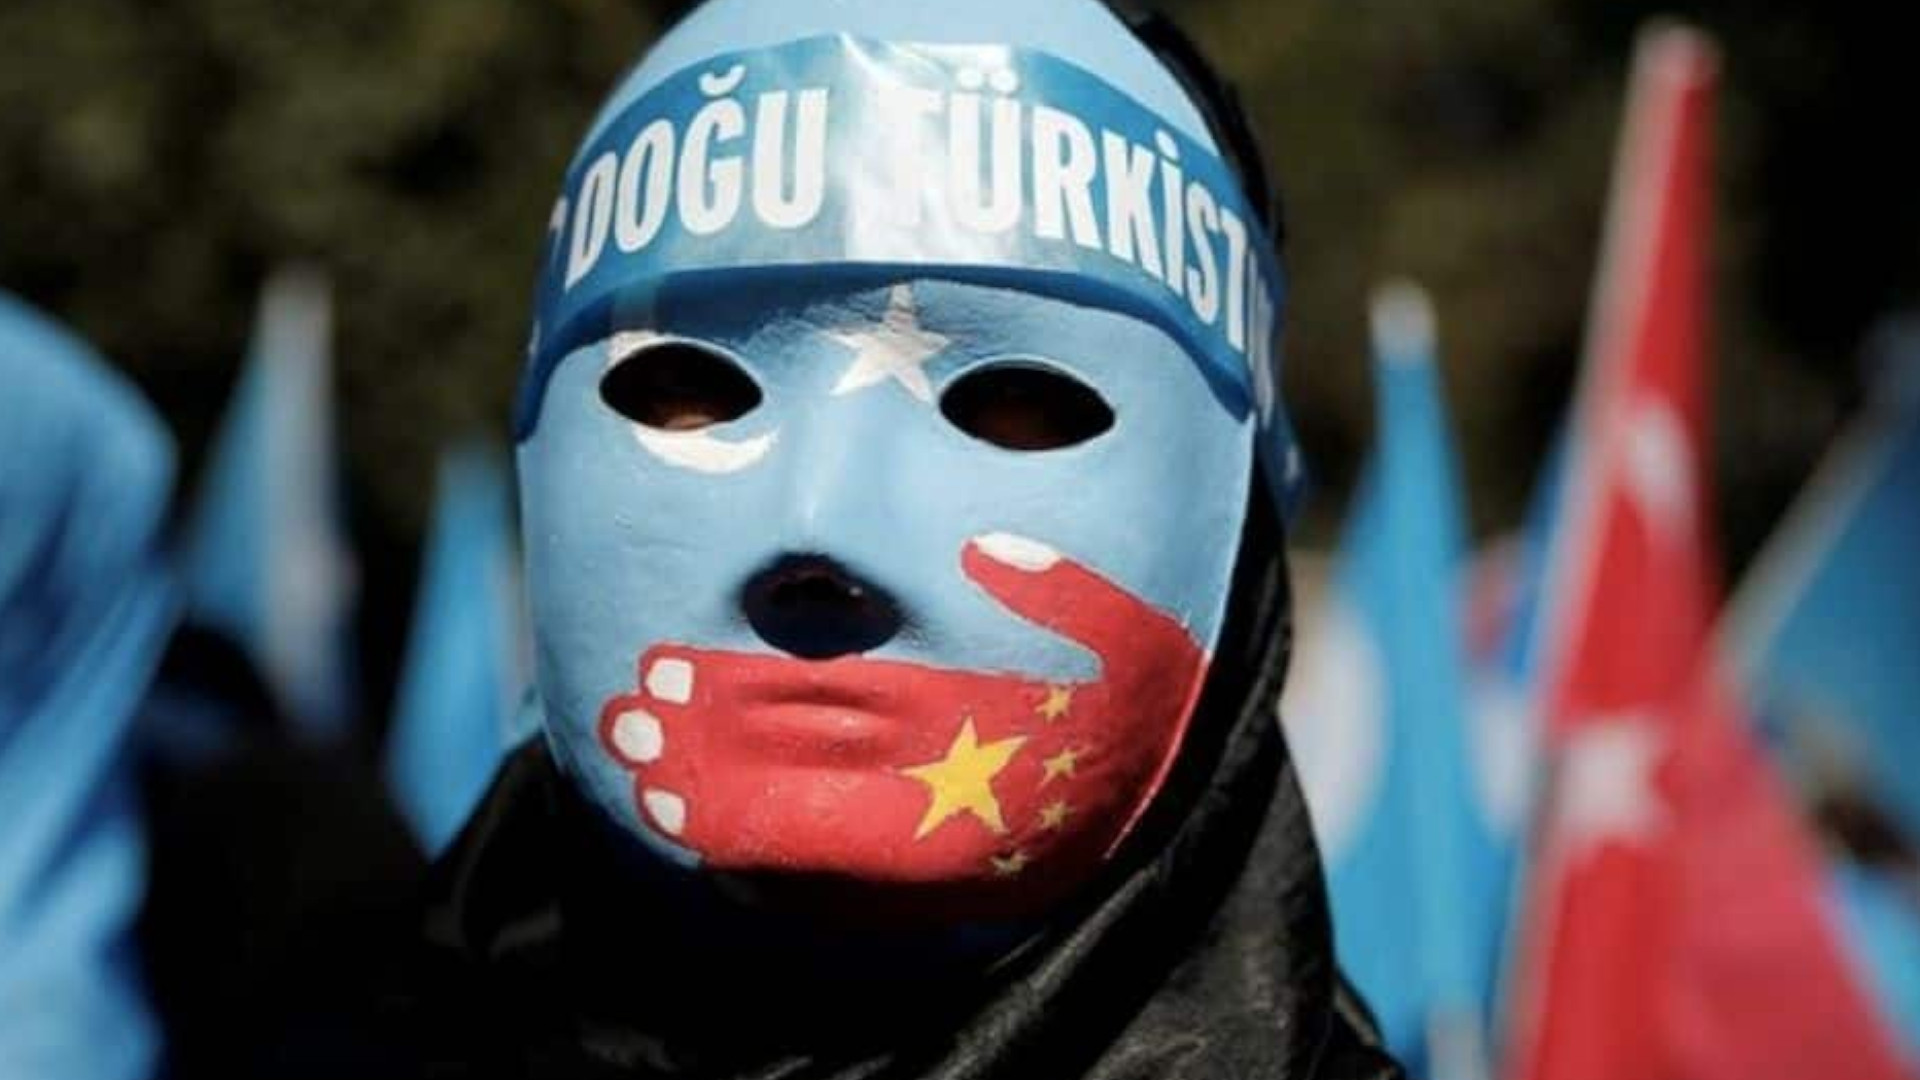 How China’s influence flipped Turkey’s position on Uighurs